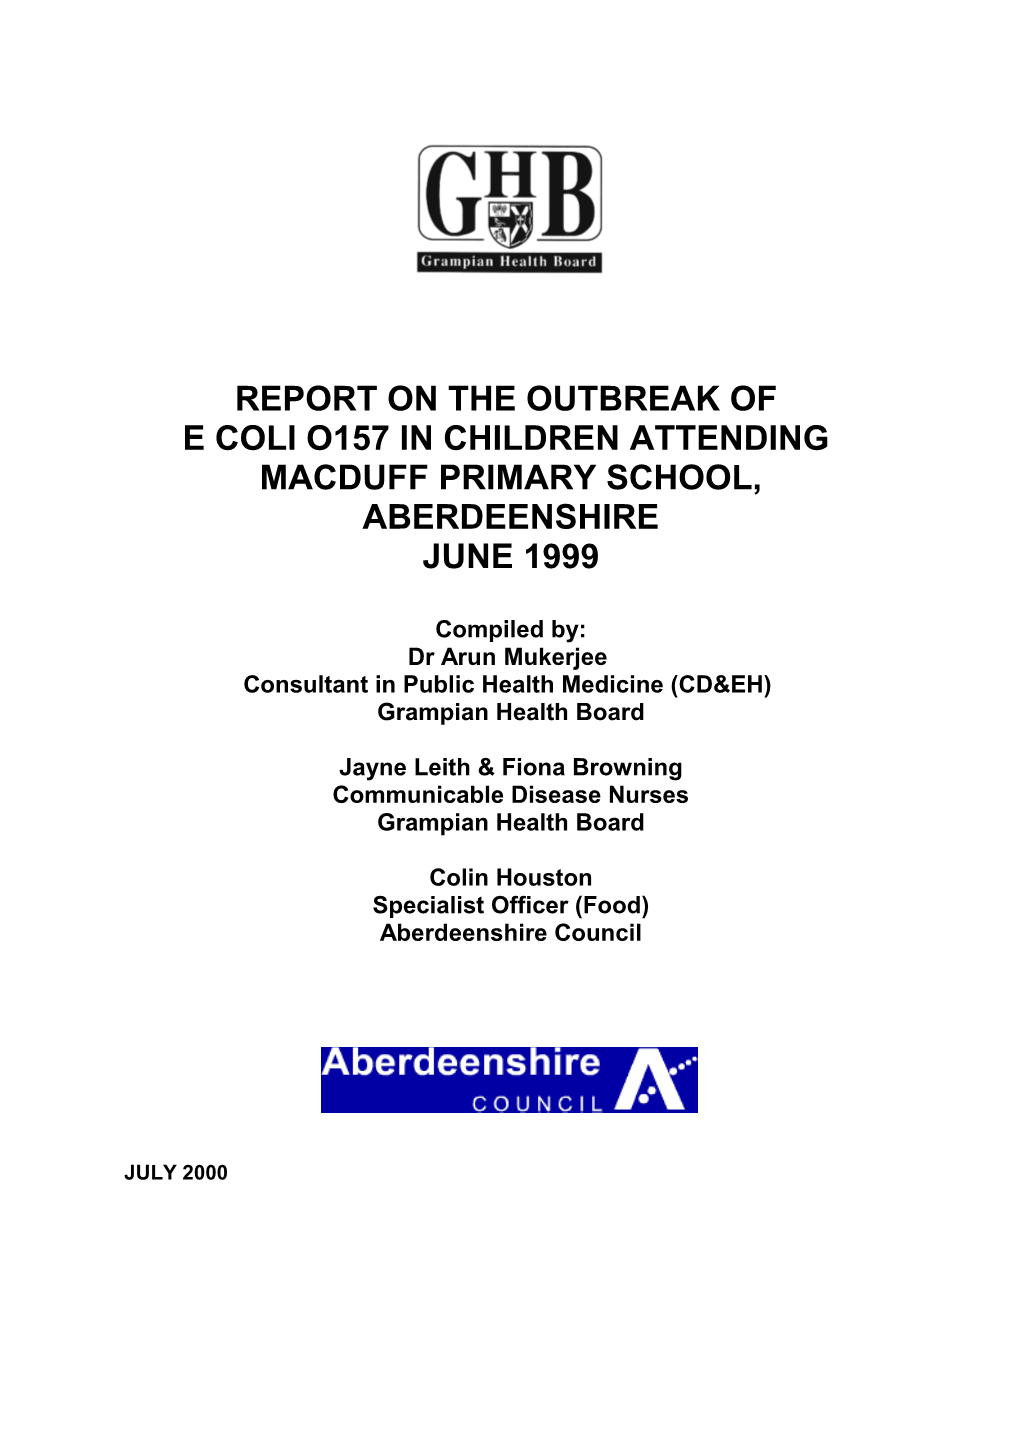 E Coli O157 Report on the Outbreak in Children Attending Macduff Primary School, Aberdeenshire